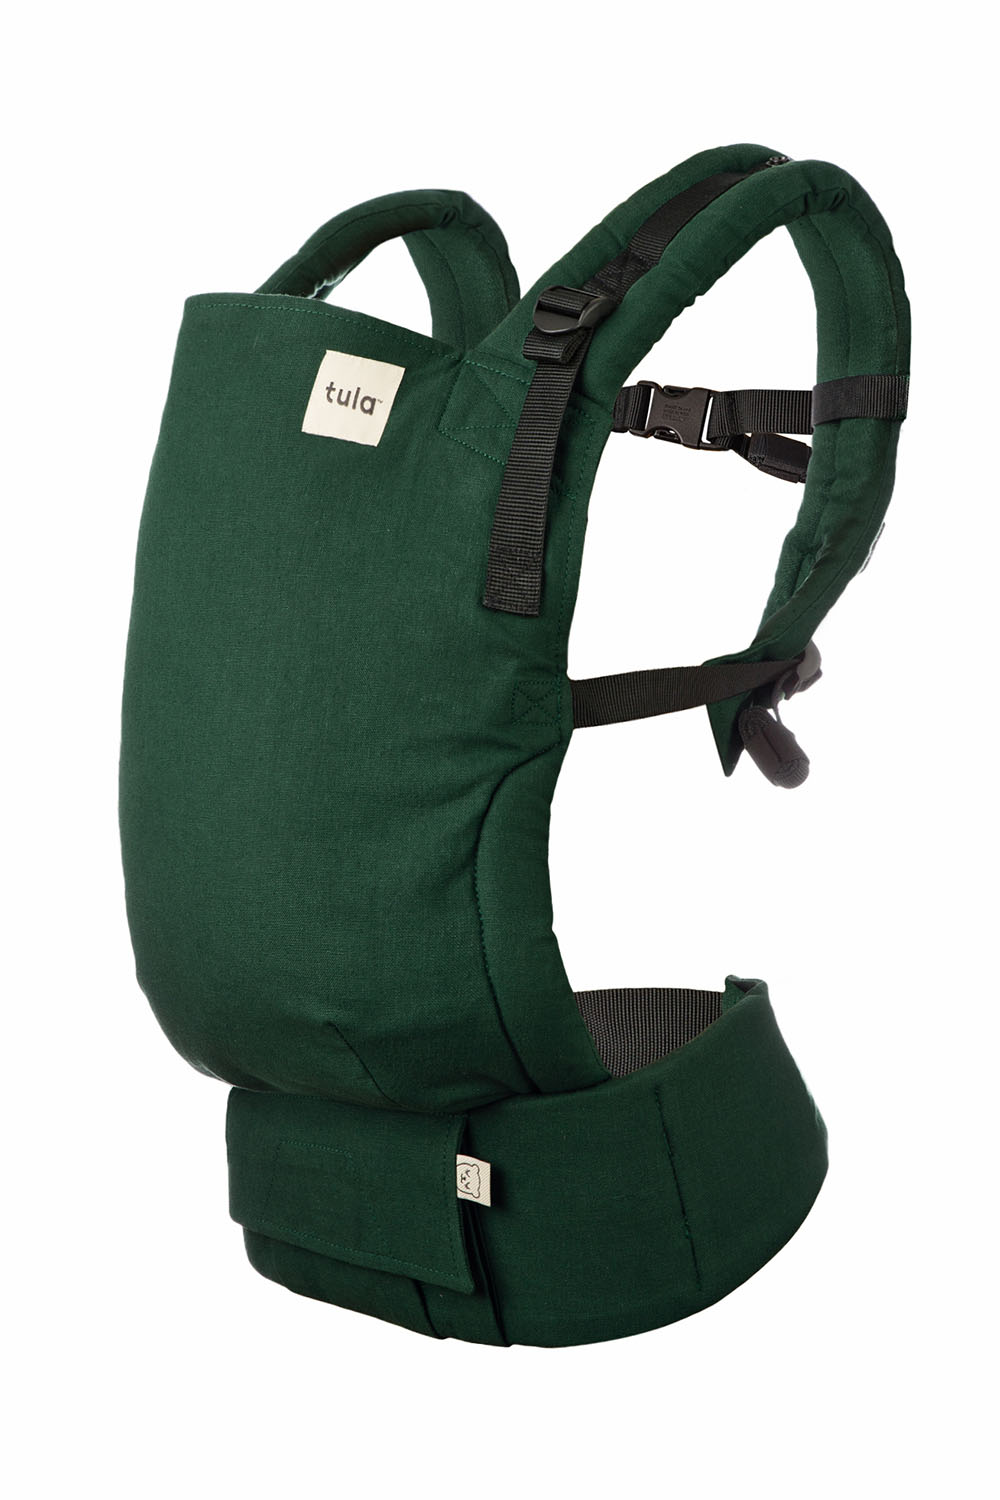 Emerald - Hemp Free-to-Grow Baby Carrier